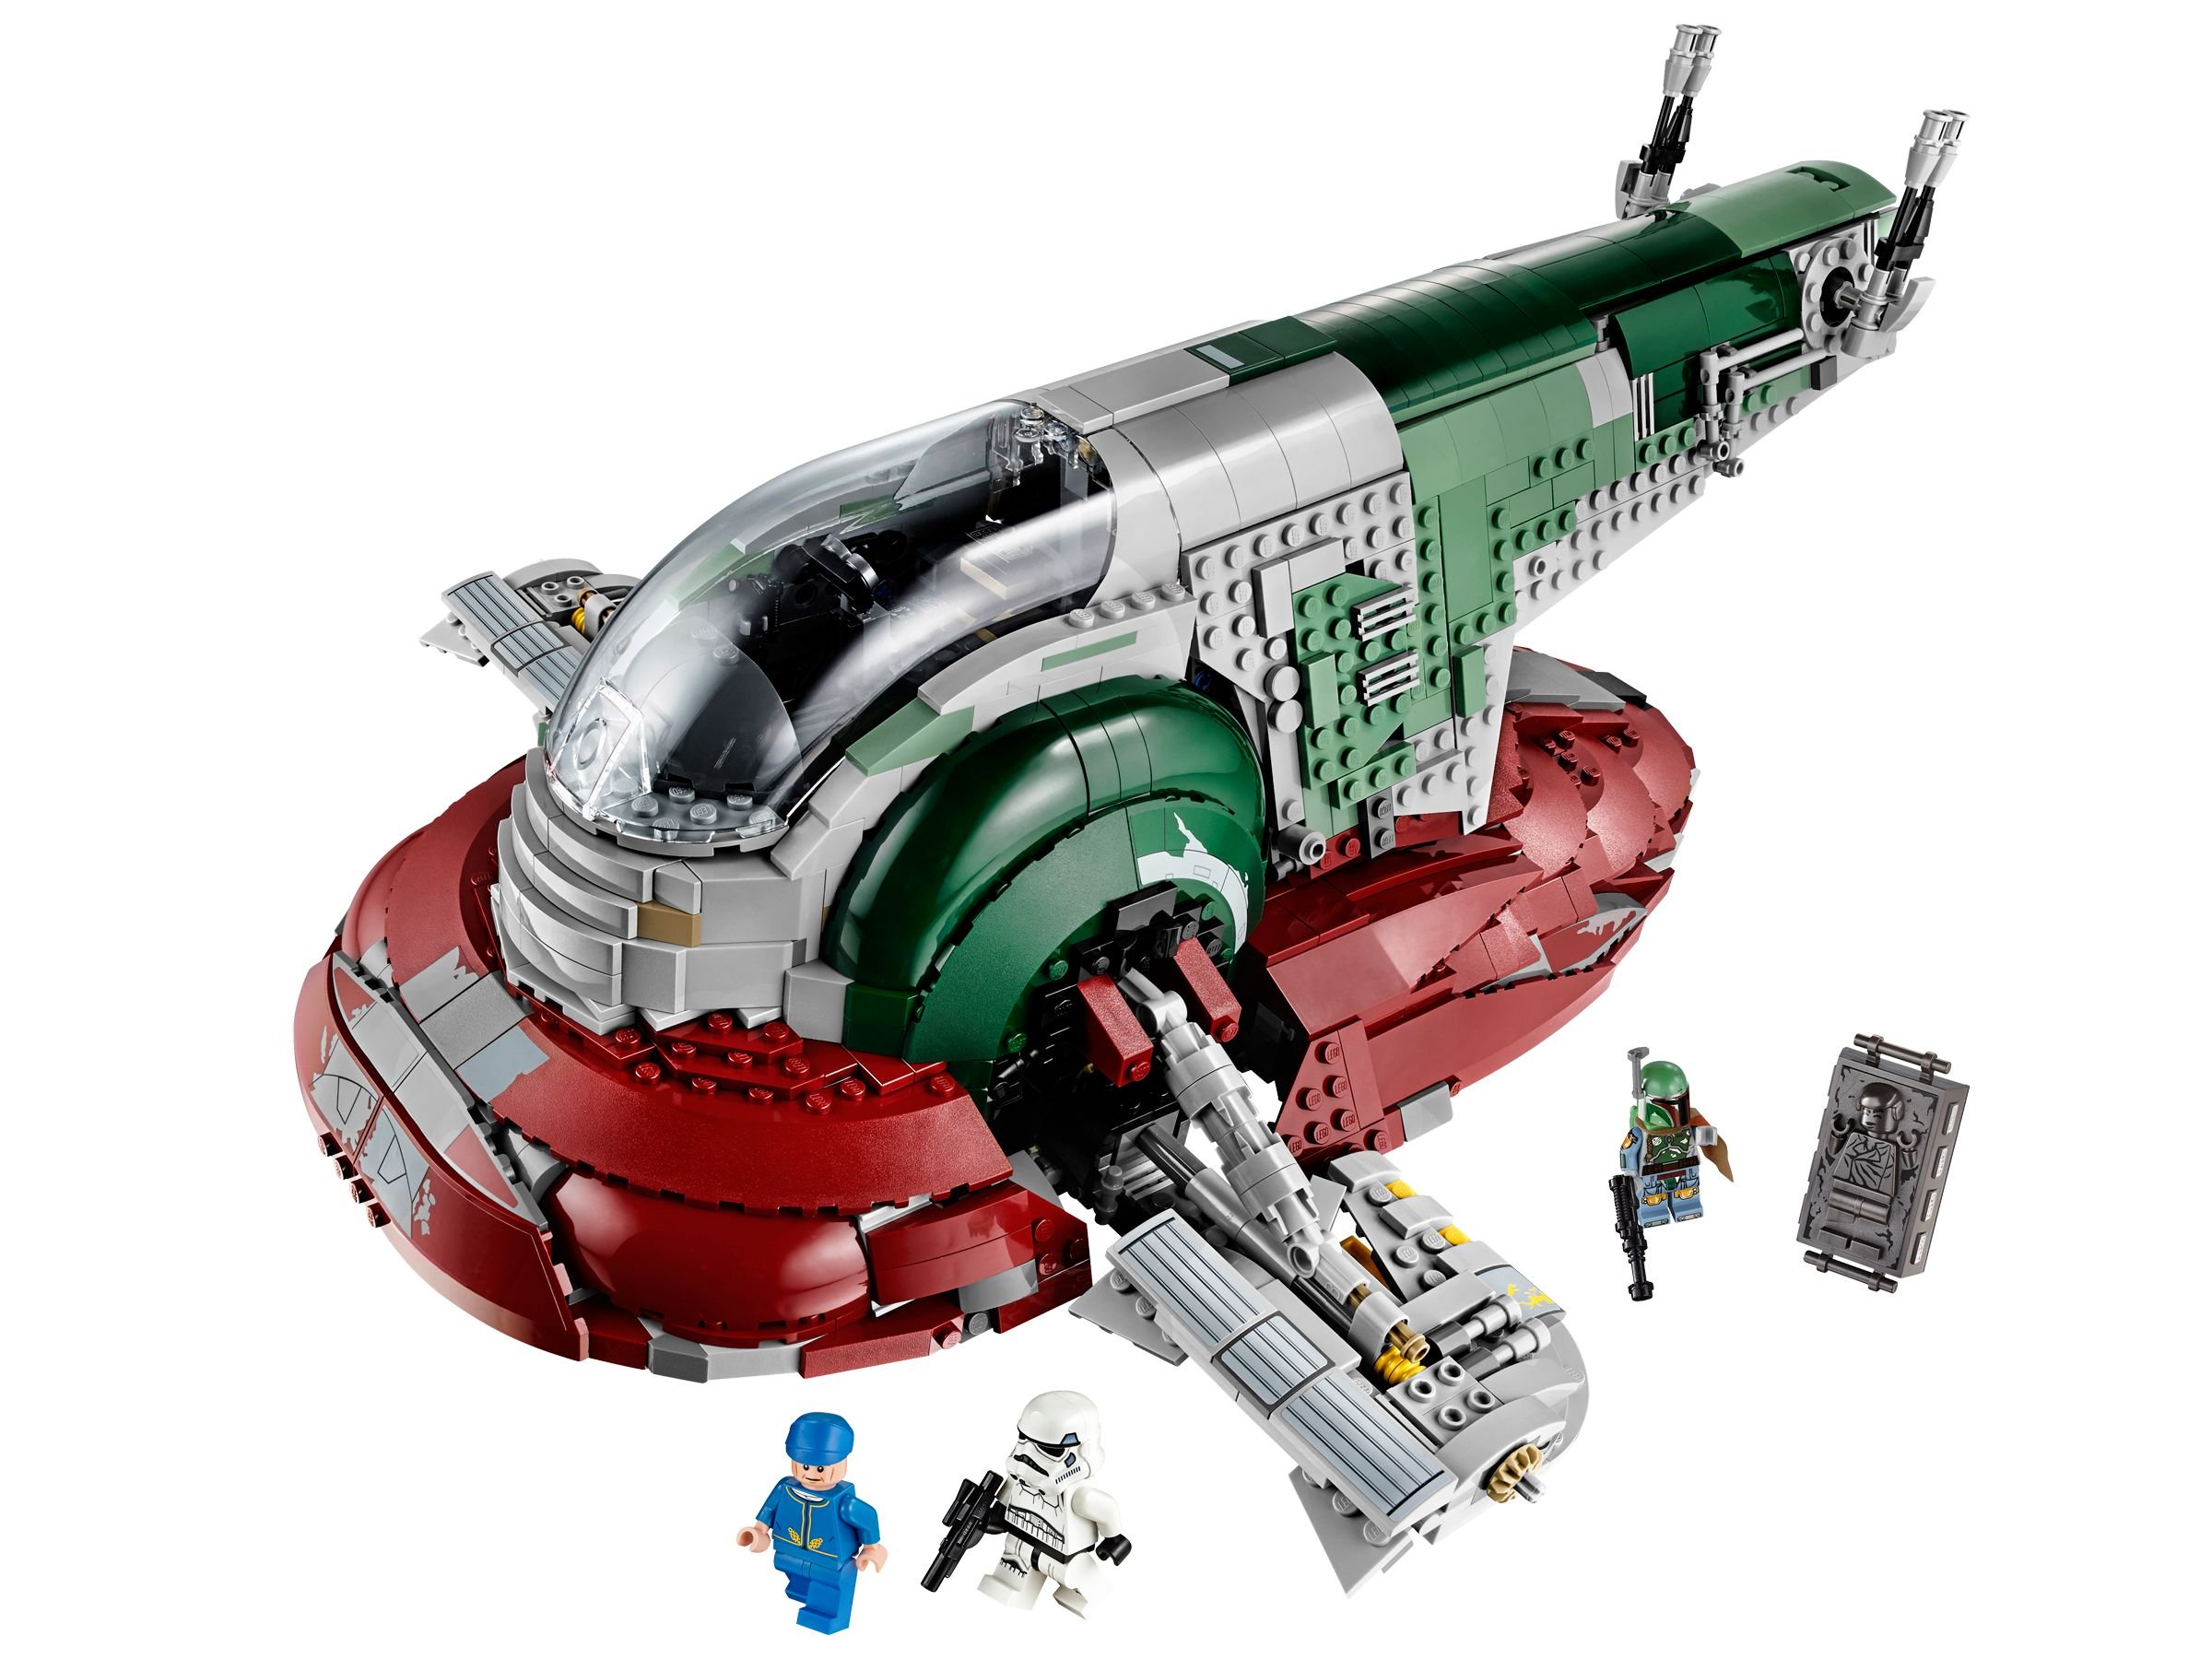 LEGO Star Wars 75060 UCS Slave I